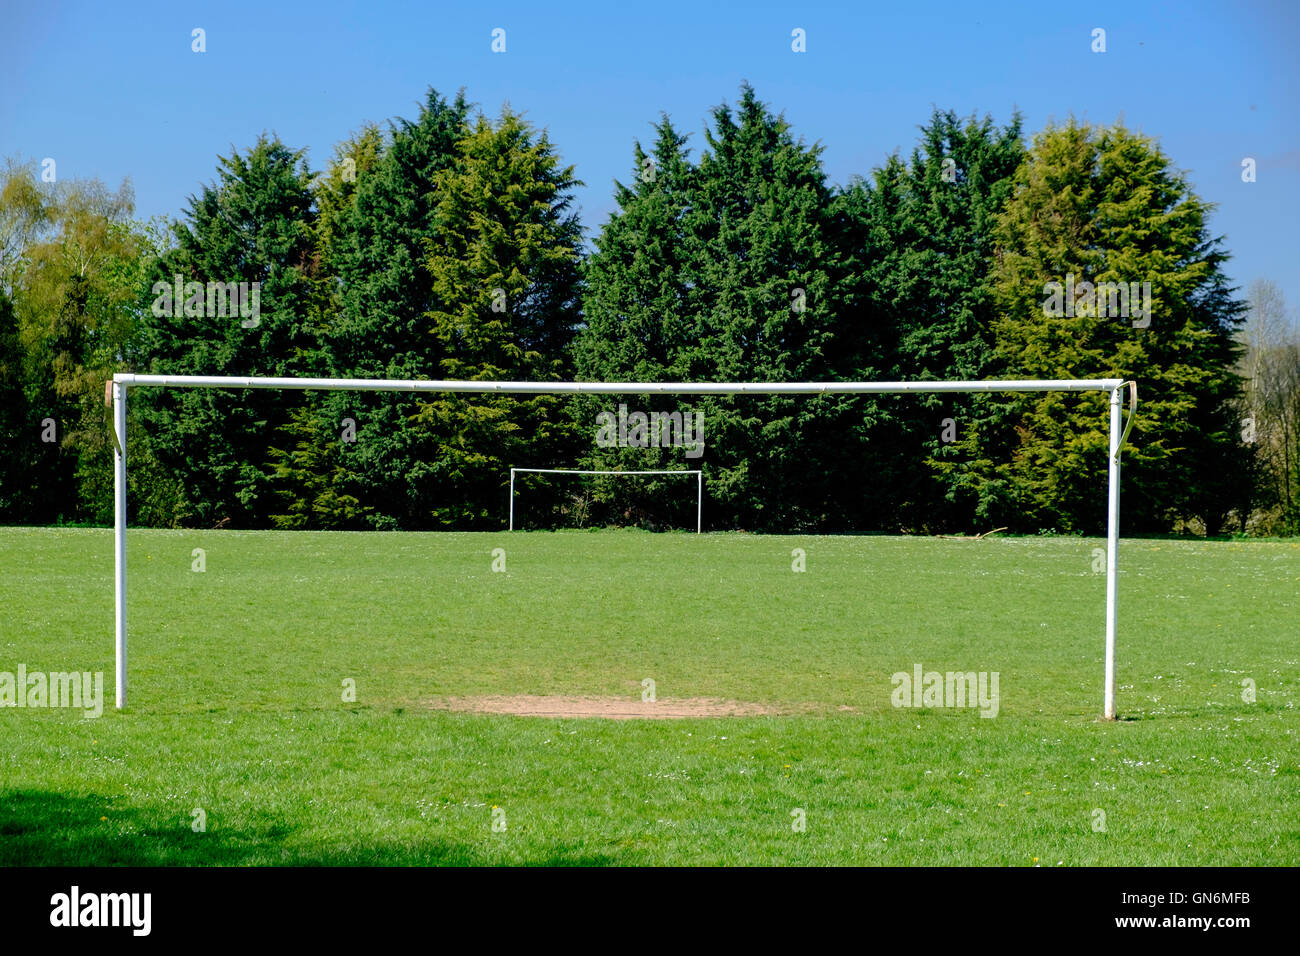 Recreation ground with football goalposts. Stock Photo